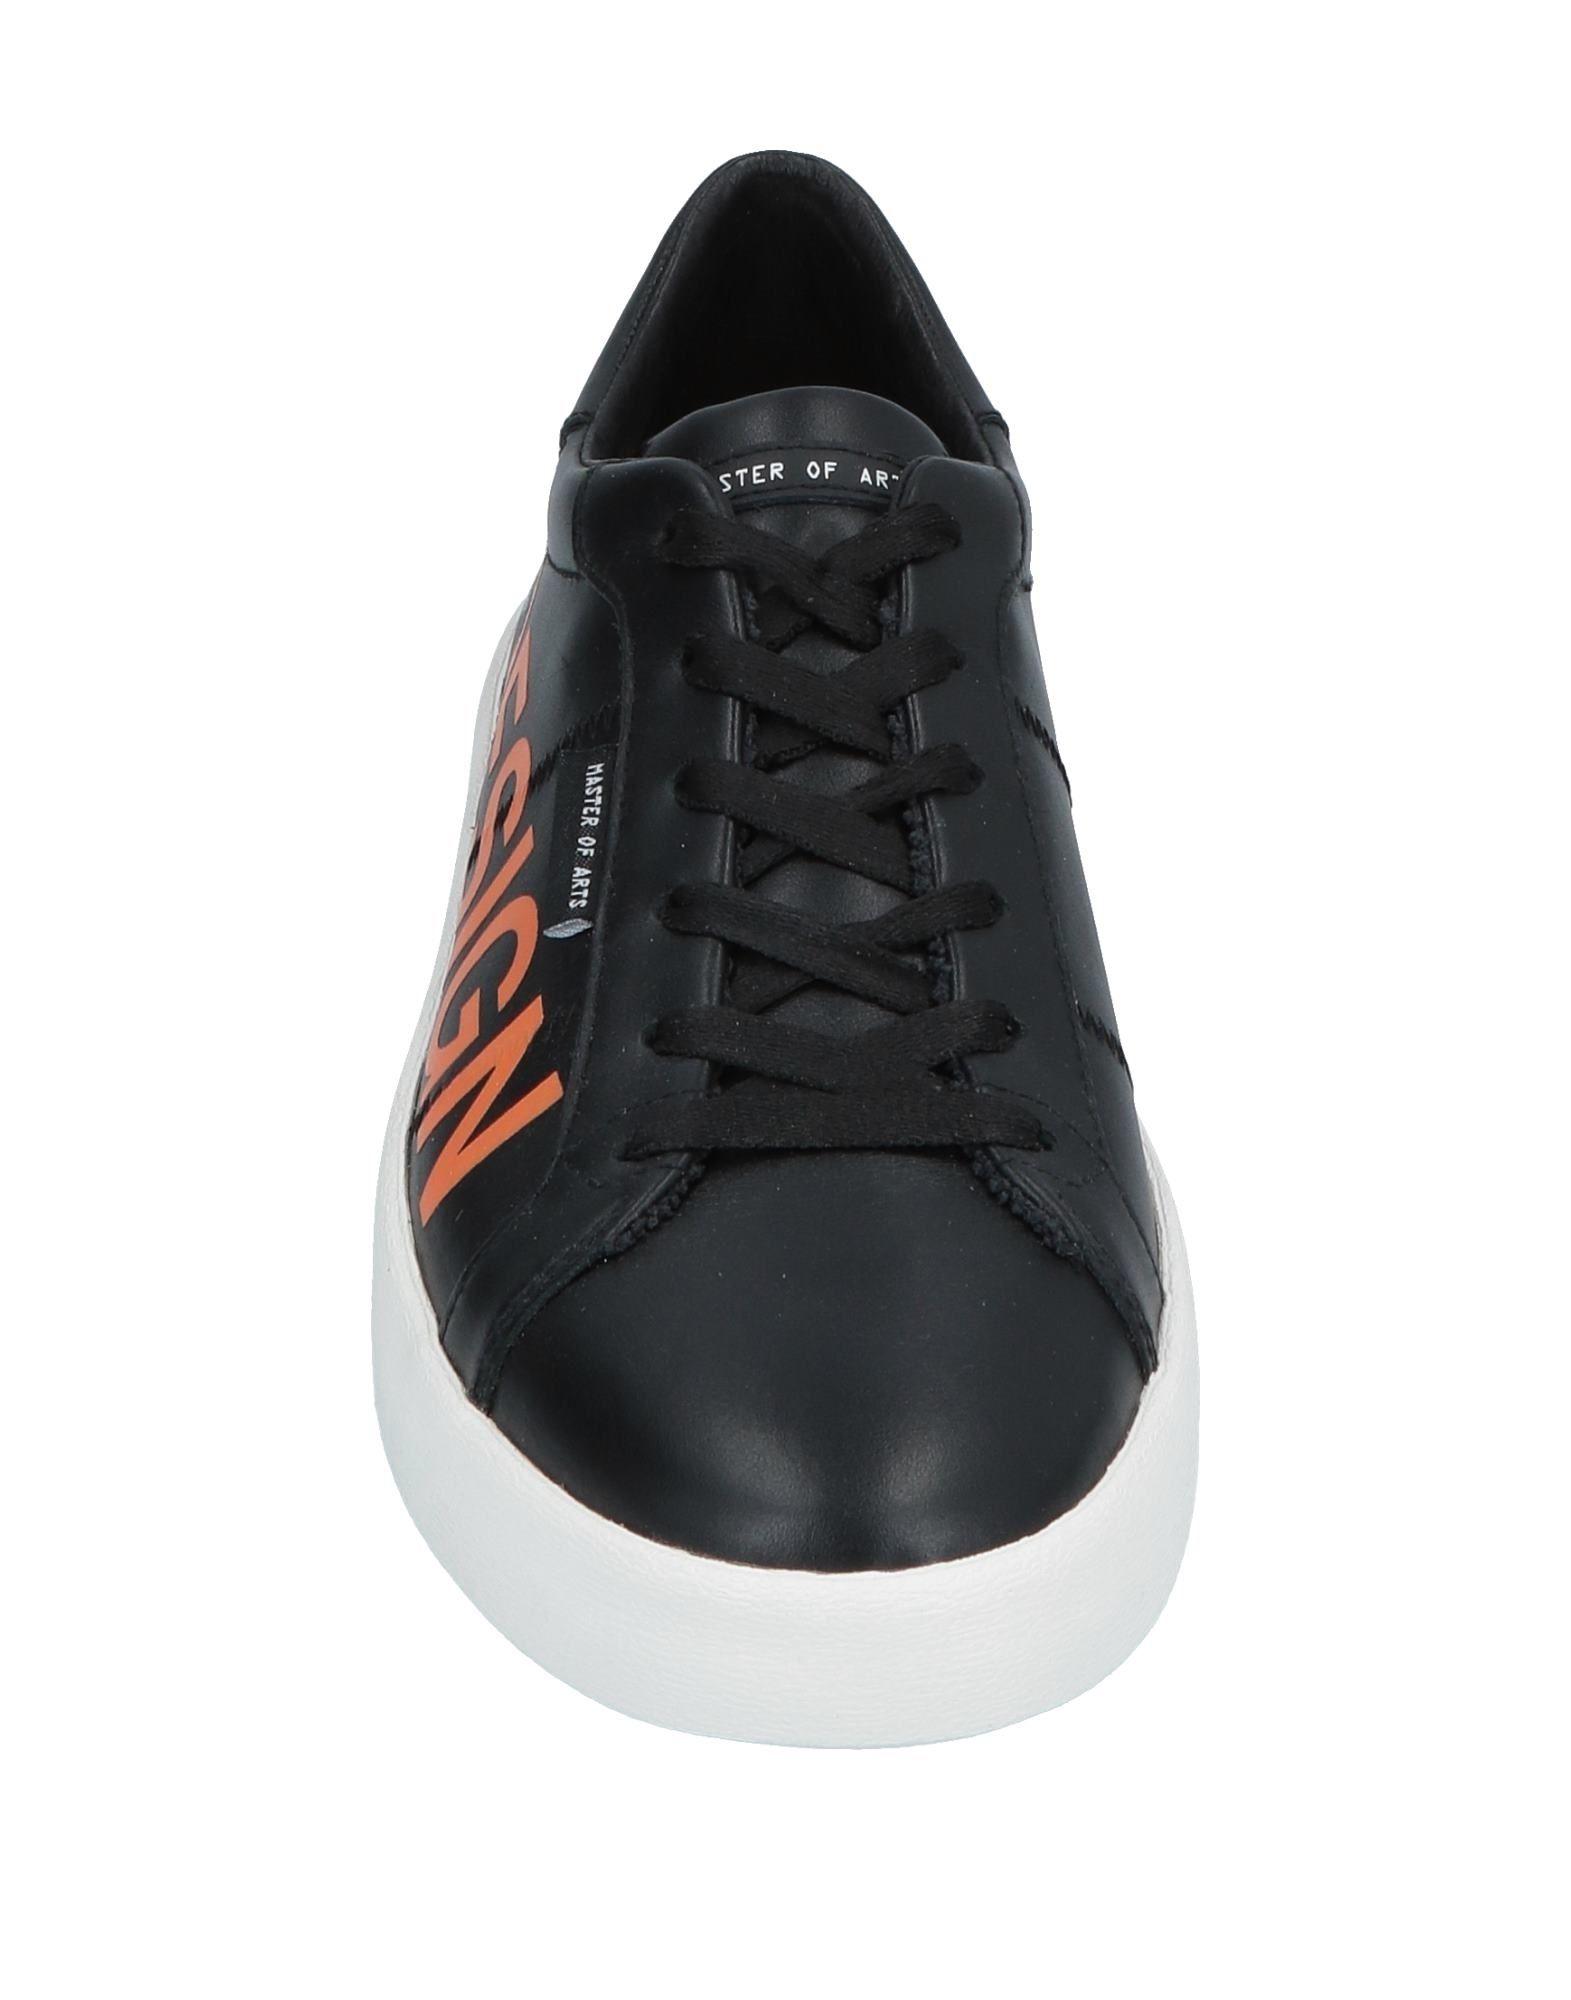 MOA Low-tops & Sneakers in Black for Men - Lyst